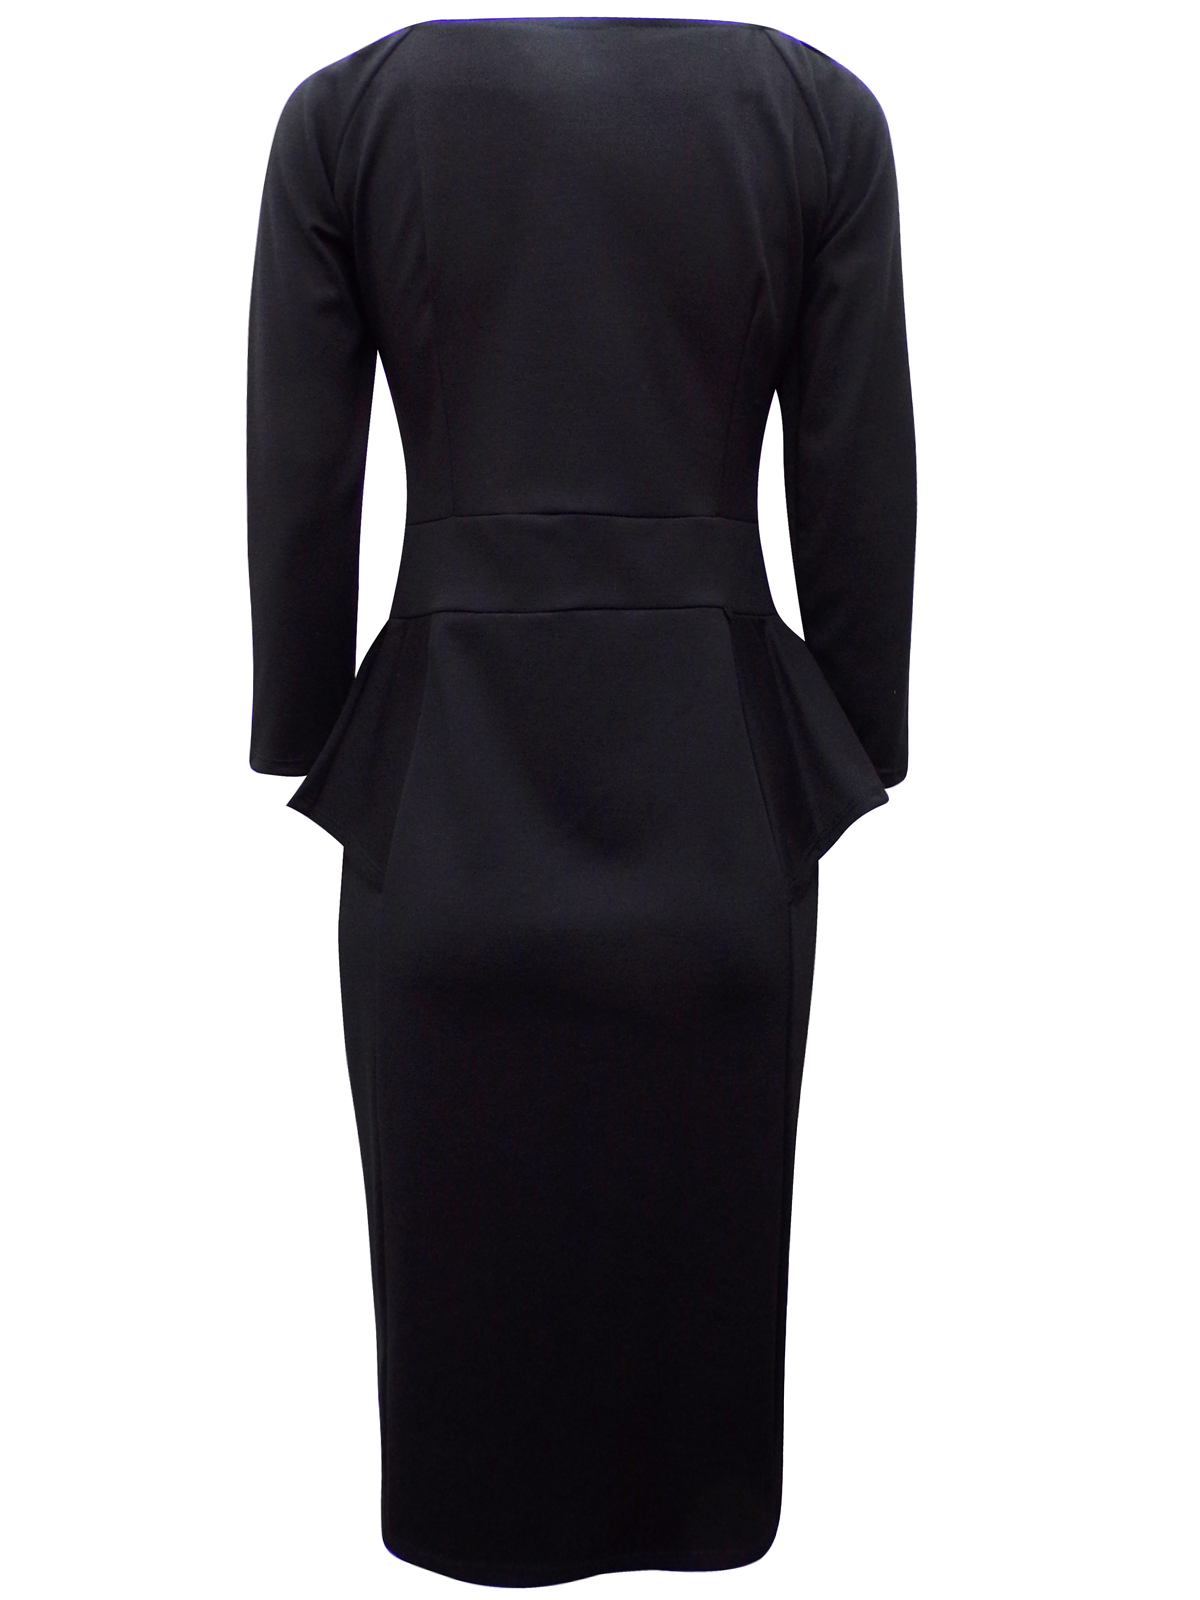 //text.. - - BLACK Peplum Midi Dress - Size Small to Large